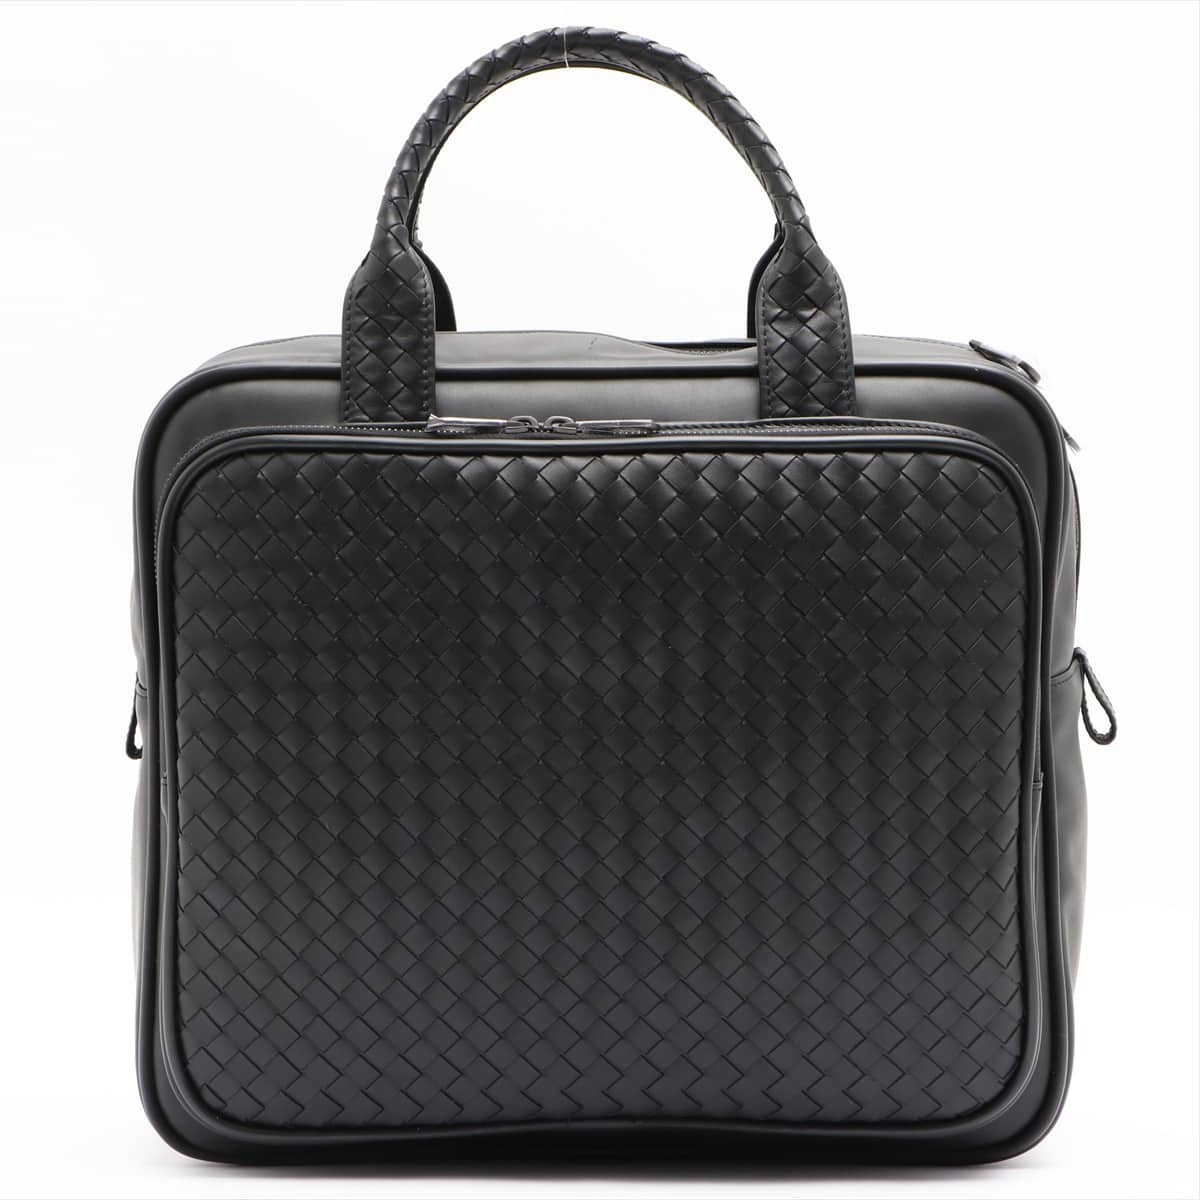 Bottega Veneta Intrecciato Leather Hand bag Black 274546